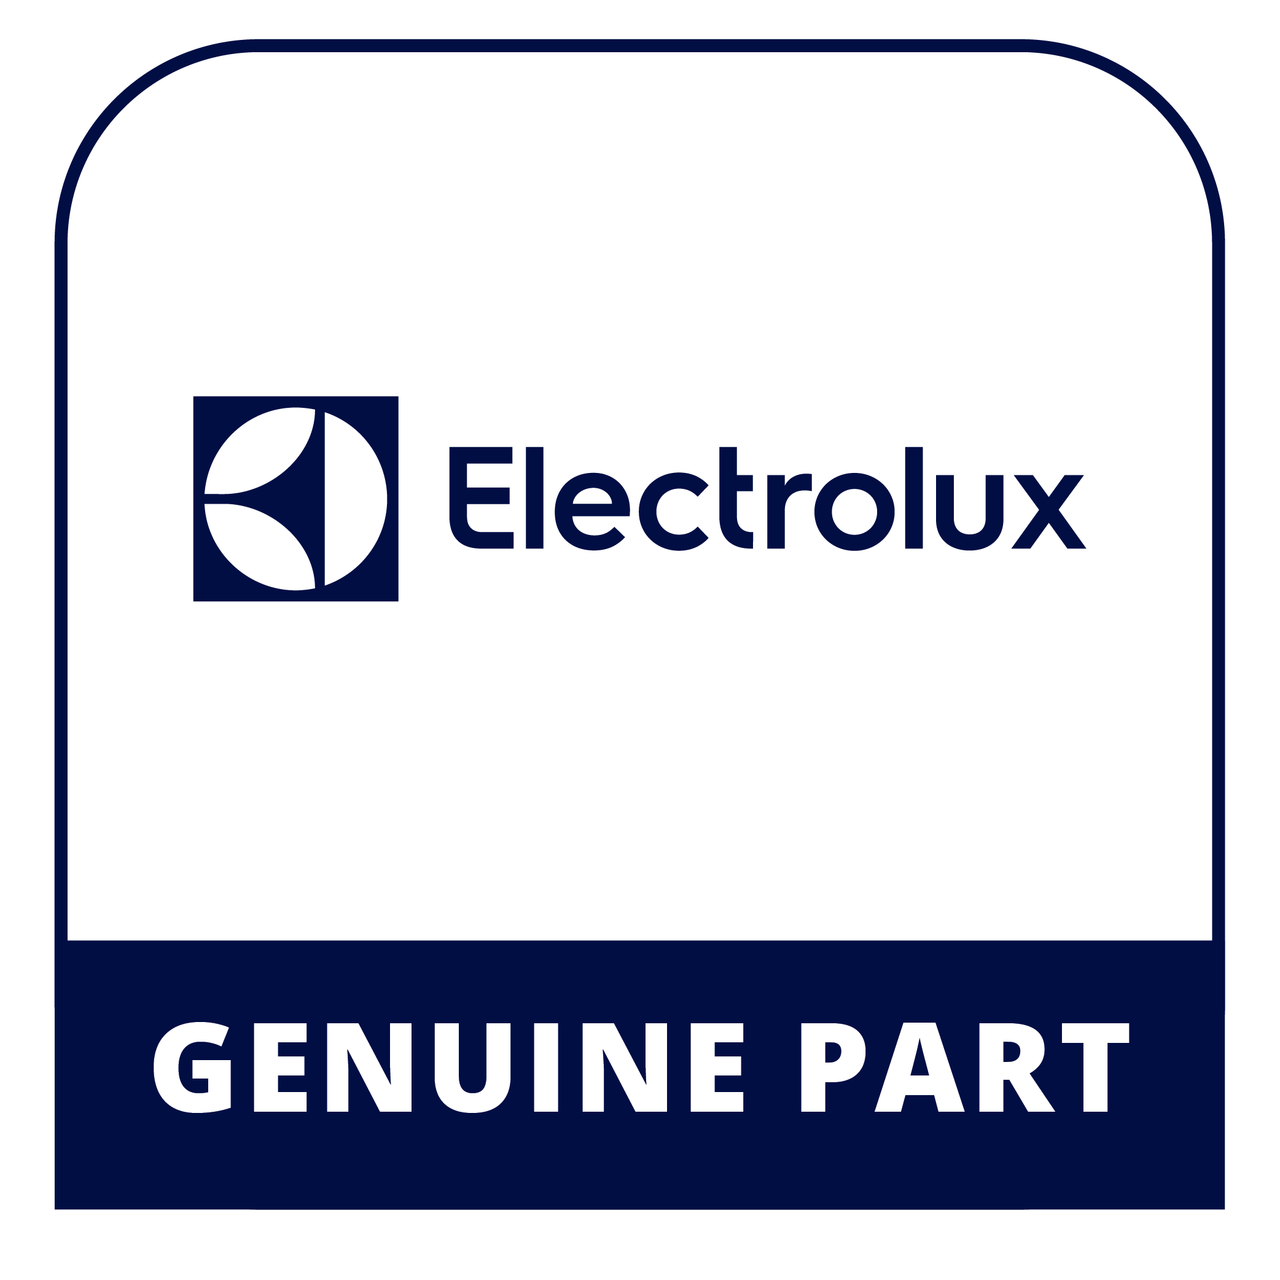 Frigidaire - Electrolux 5304526932 Deli Pan - Genuine Electrolux Part